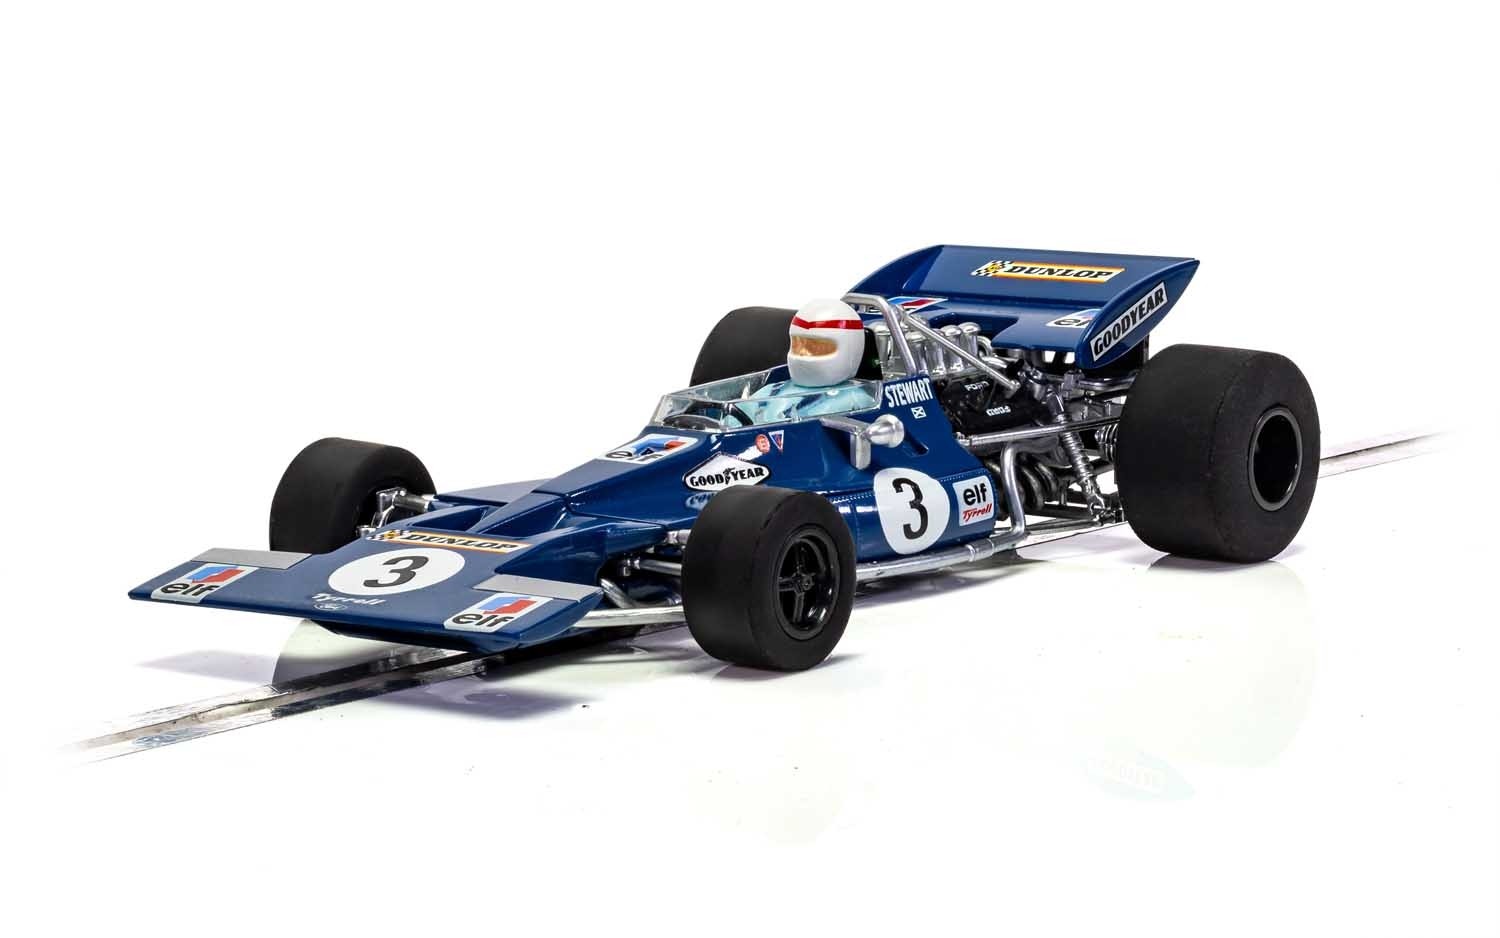 c4161_1_tyrrell-001-1970-canadian-grand-prix-jackie-stewart_product.jpg